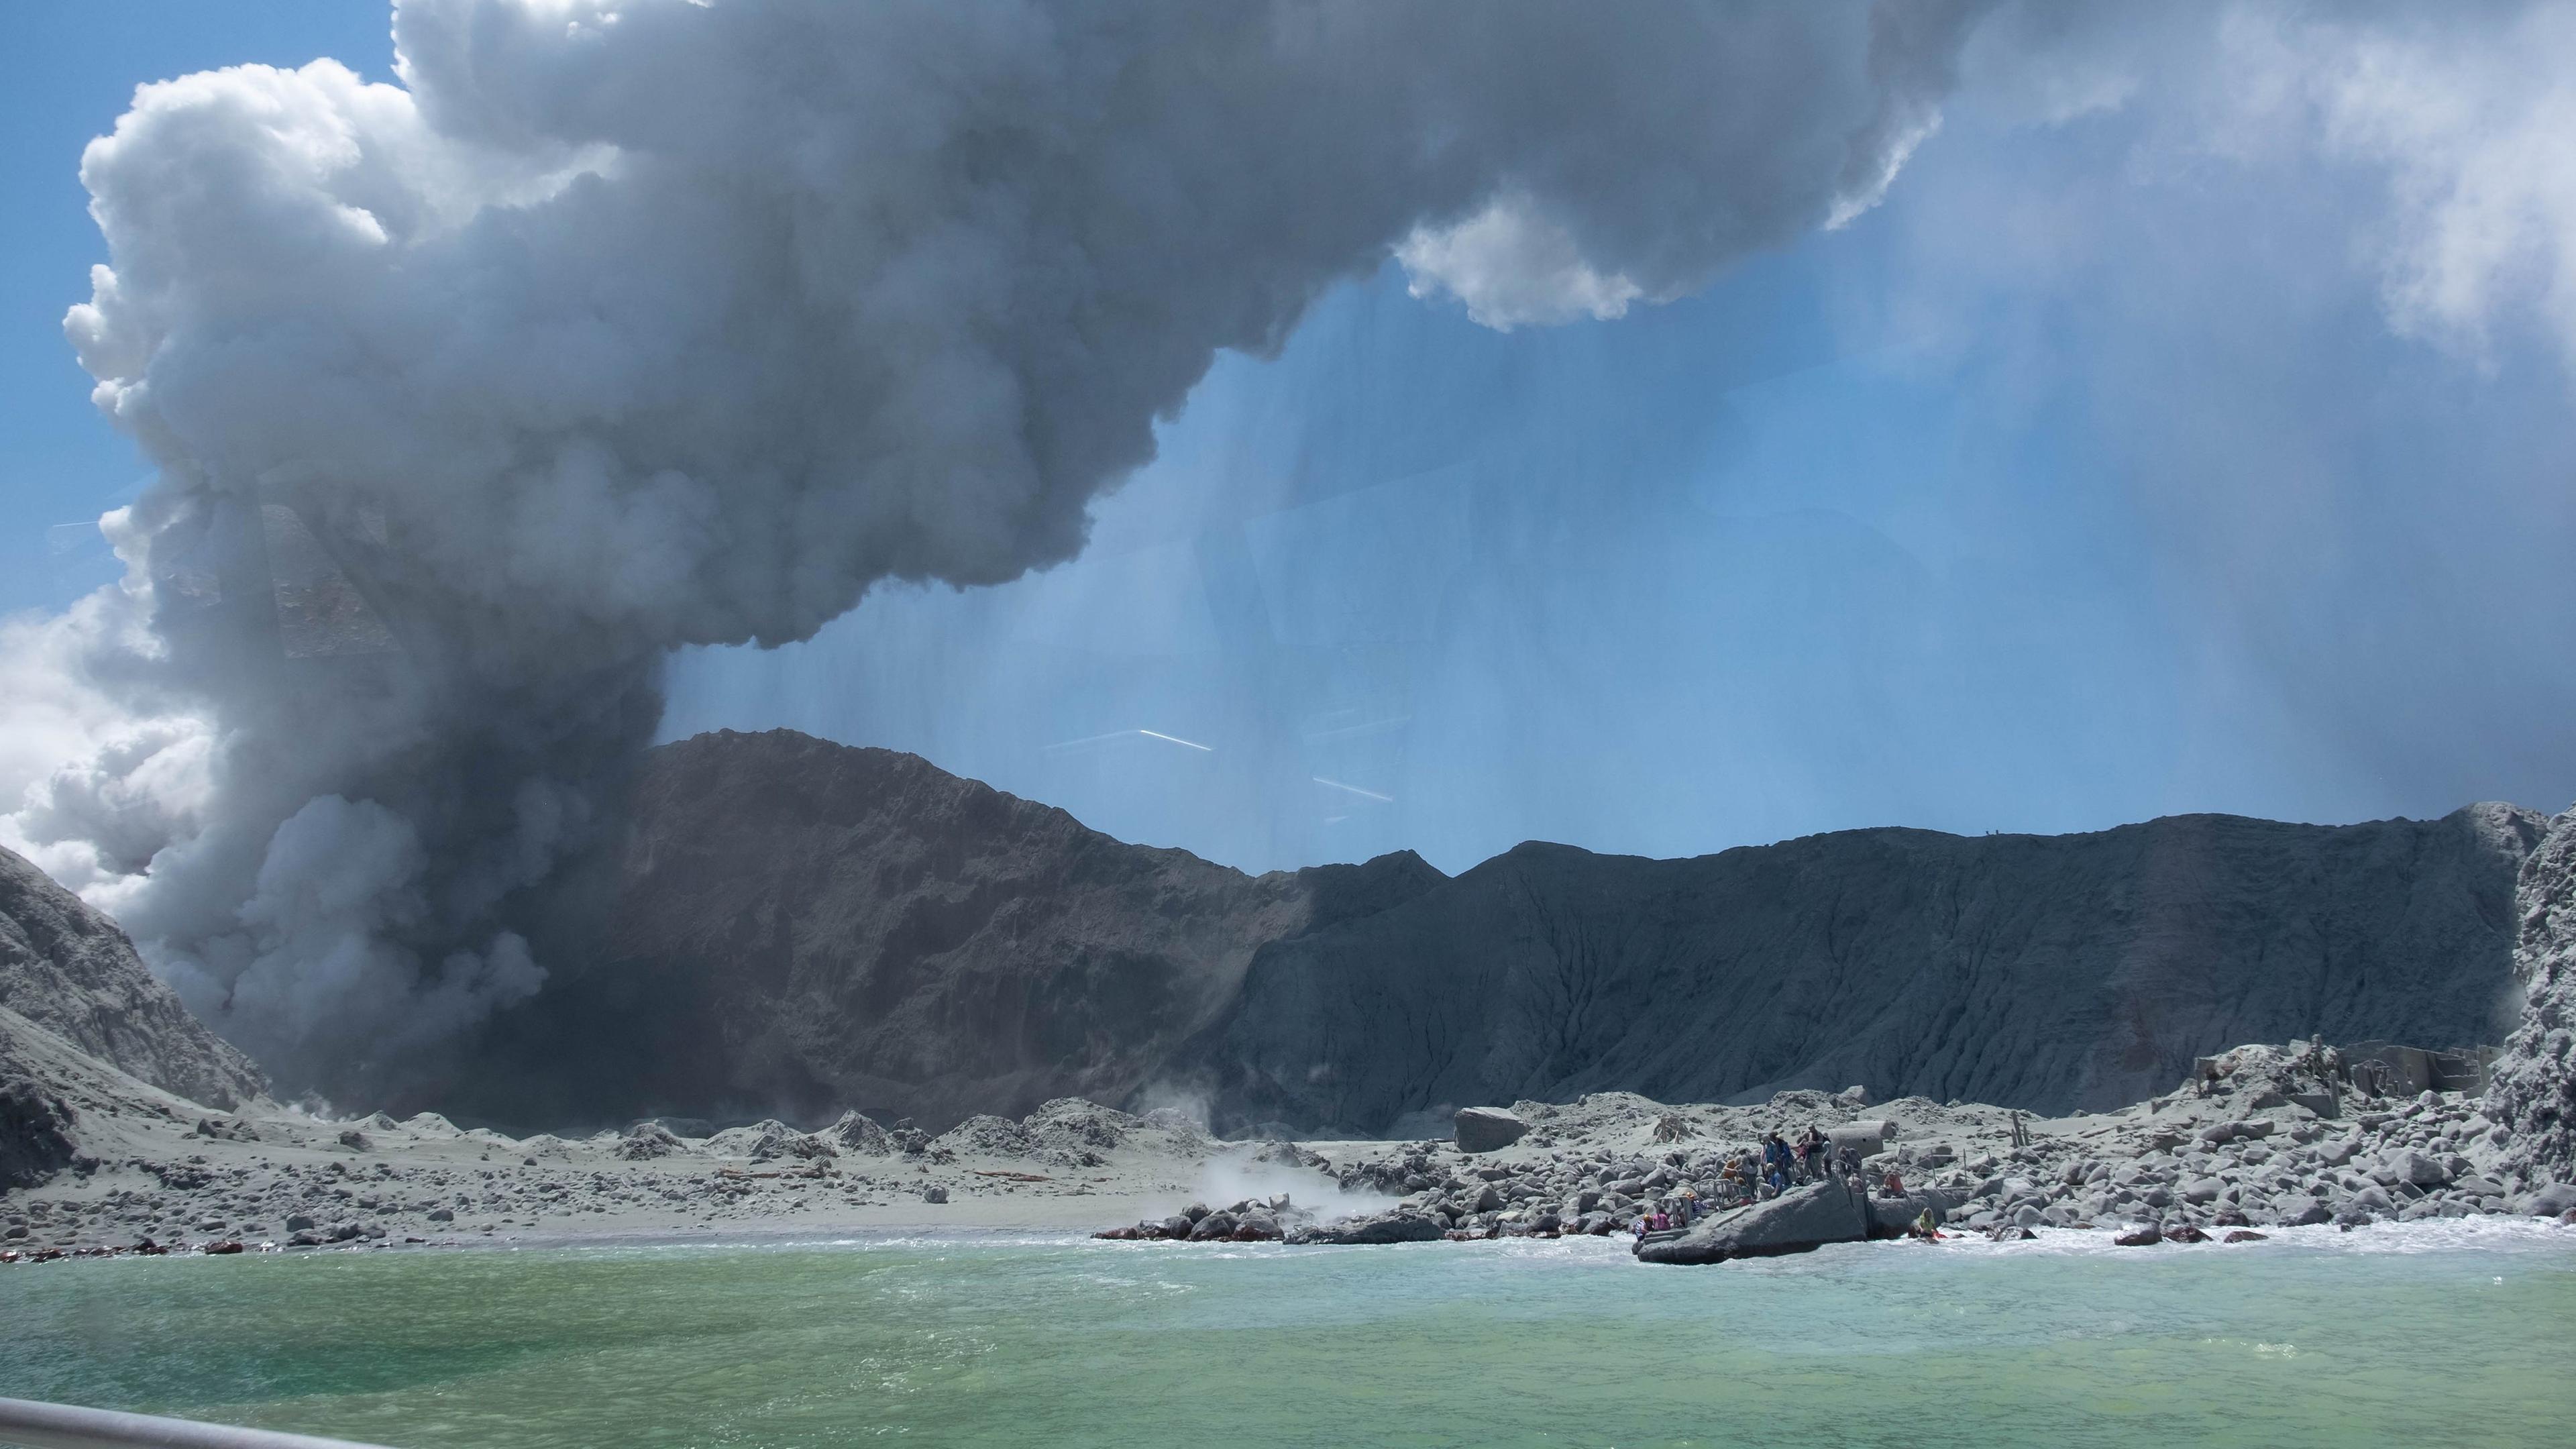 Vulkan Whakaari in der Bay of Plenty (Neuseeland), aufgenommen am 09.12.2019